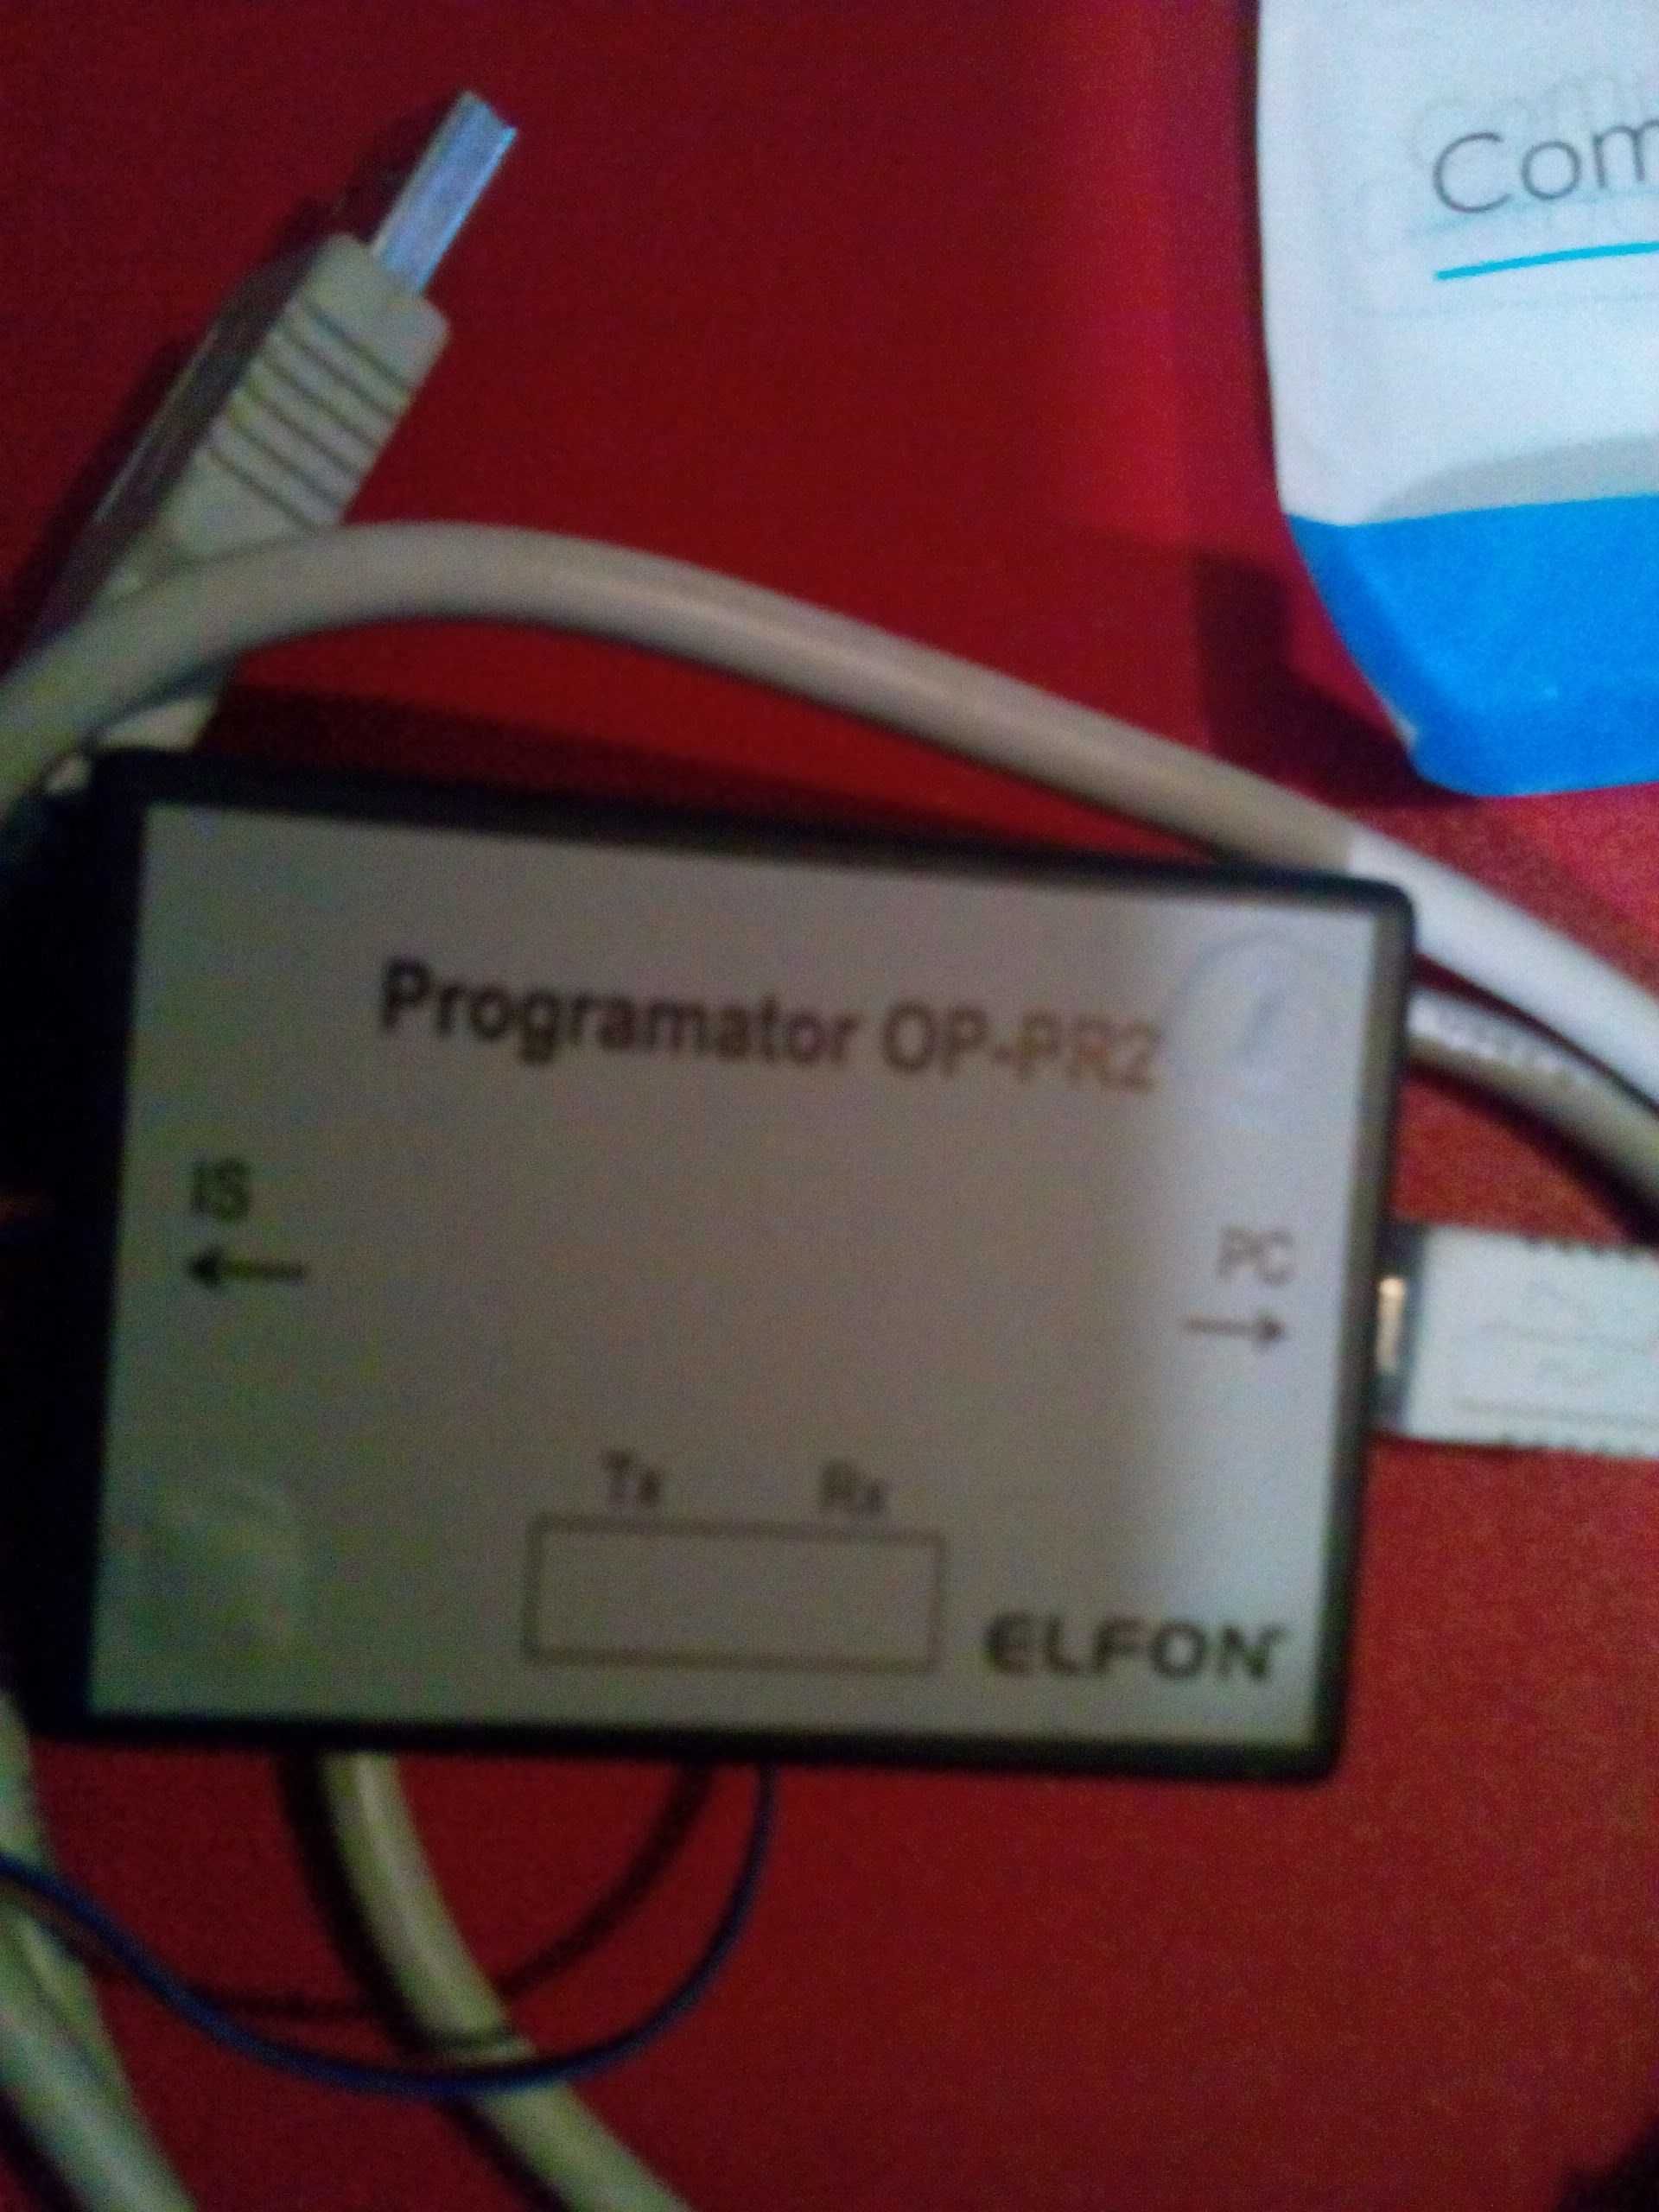 Programator  OP-PR2 i Optima ELFON z poziomu komputera